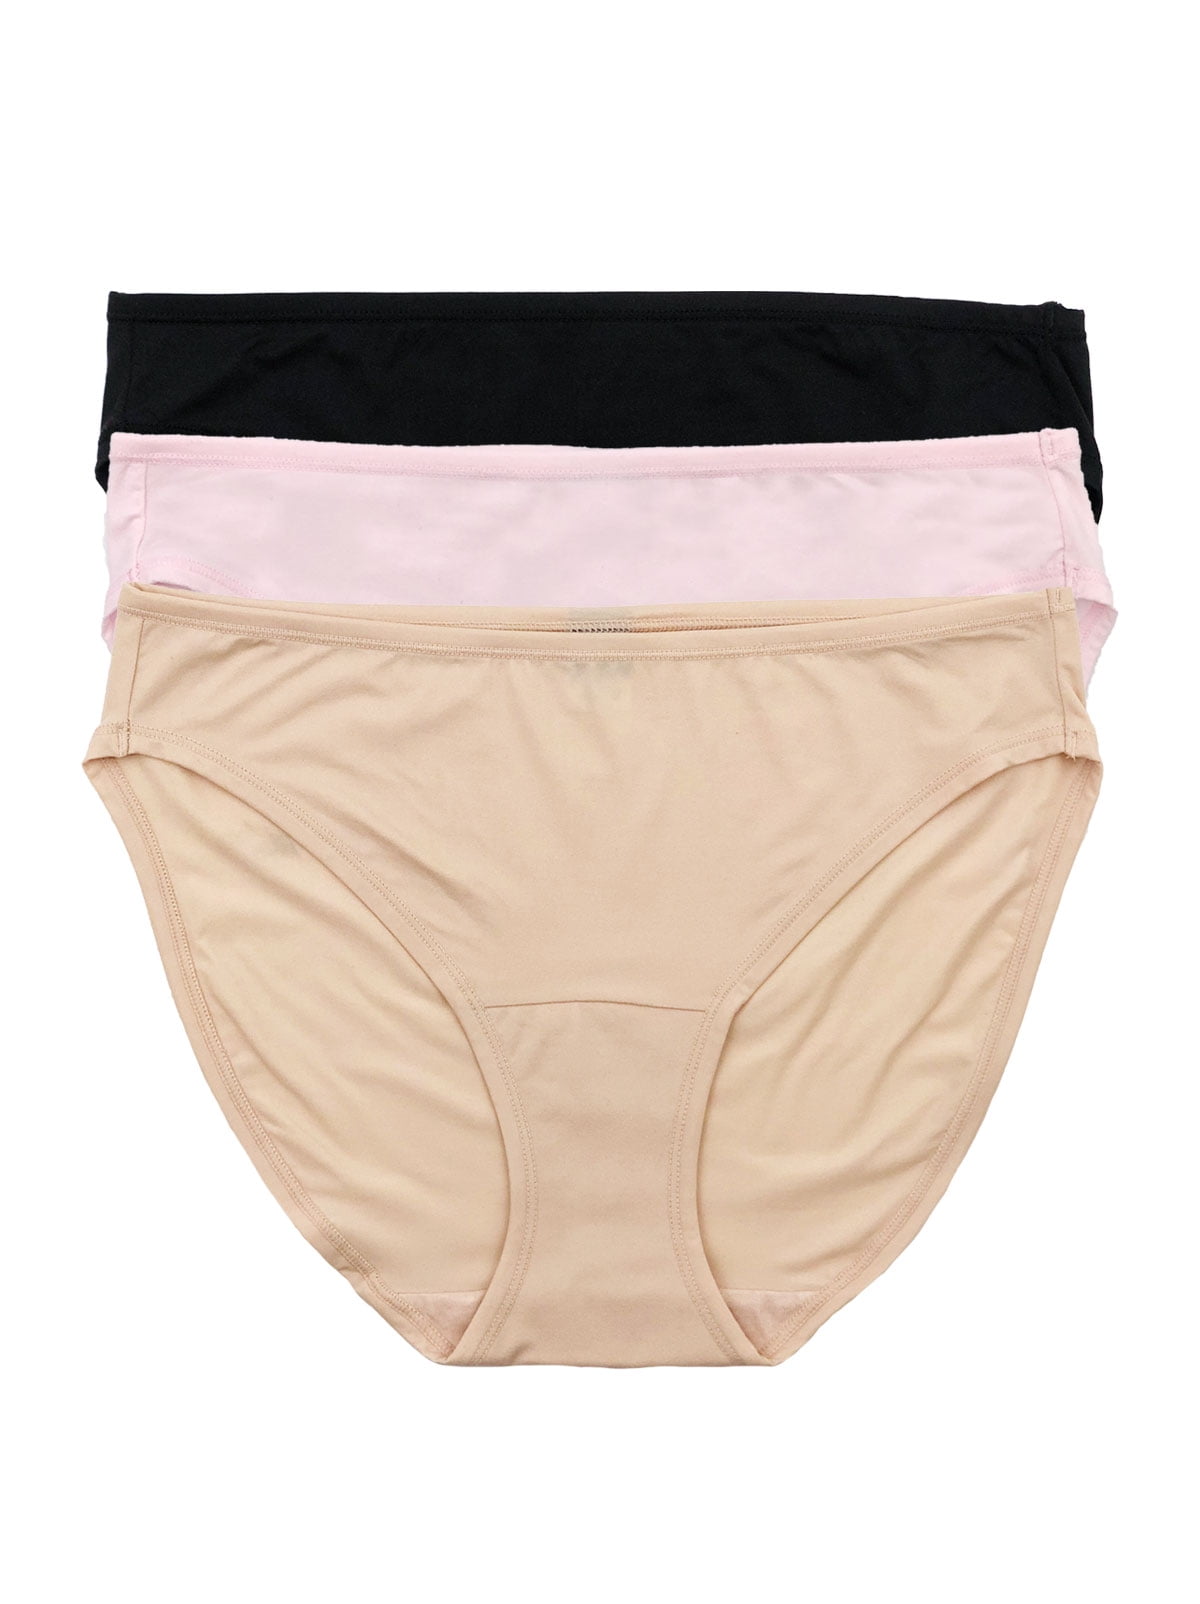 Felina Cotton Modal Hi Cut Panties Sexy Lingerie Panties For Women  Underwear For Women 8-Pack (Midsummer Essentials, Large)